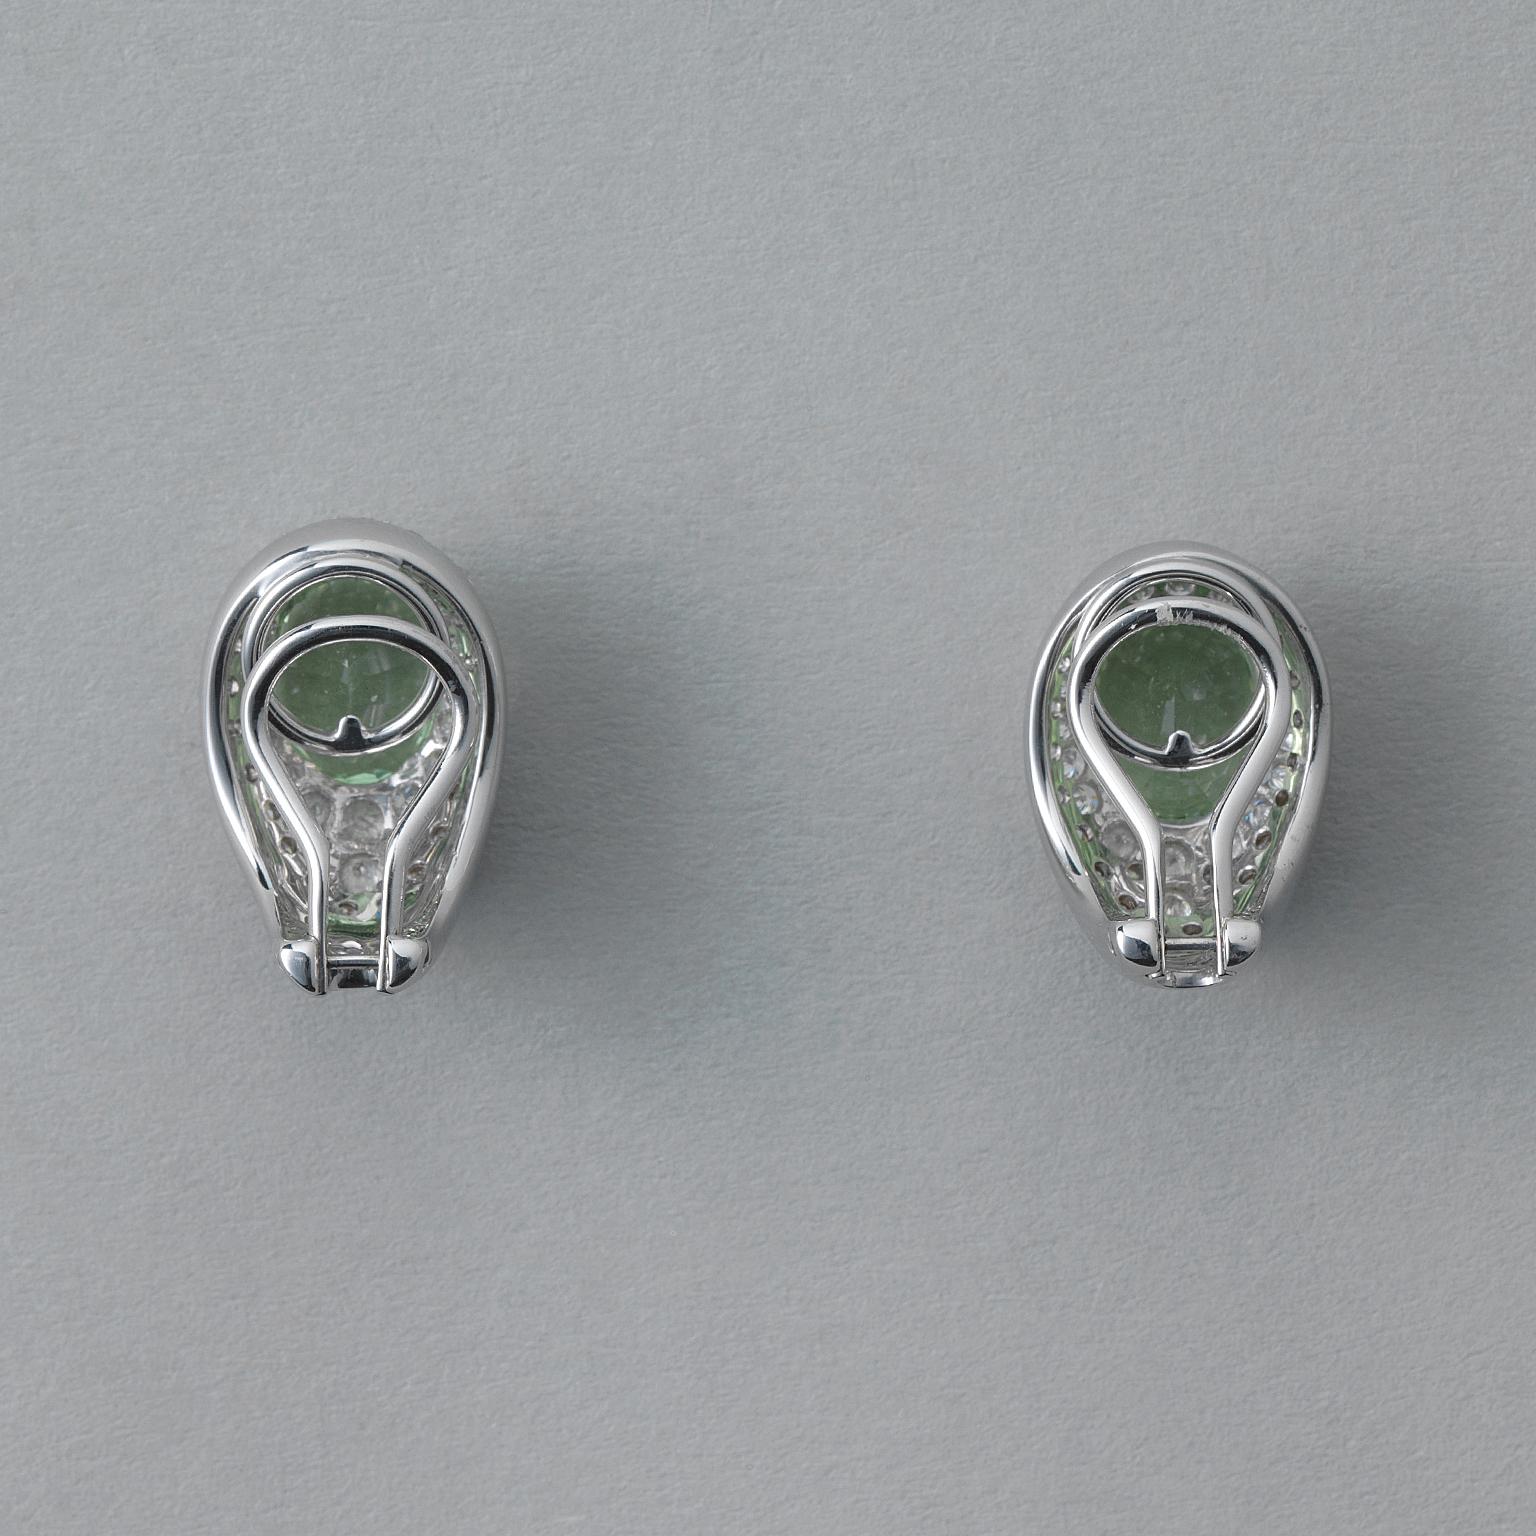 Oval Cut White Gold Diamond and Mint Green Tourmaline Earrings